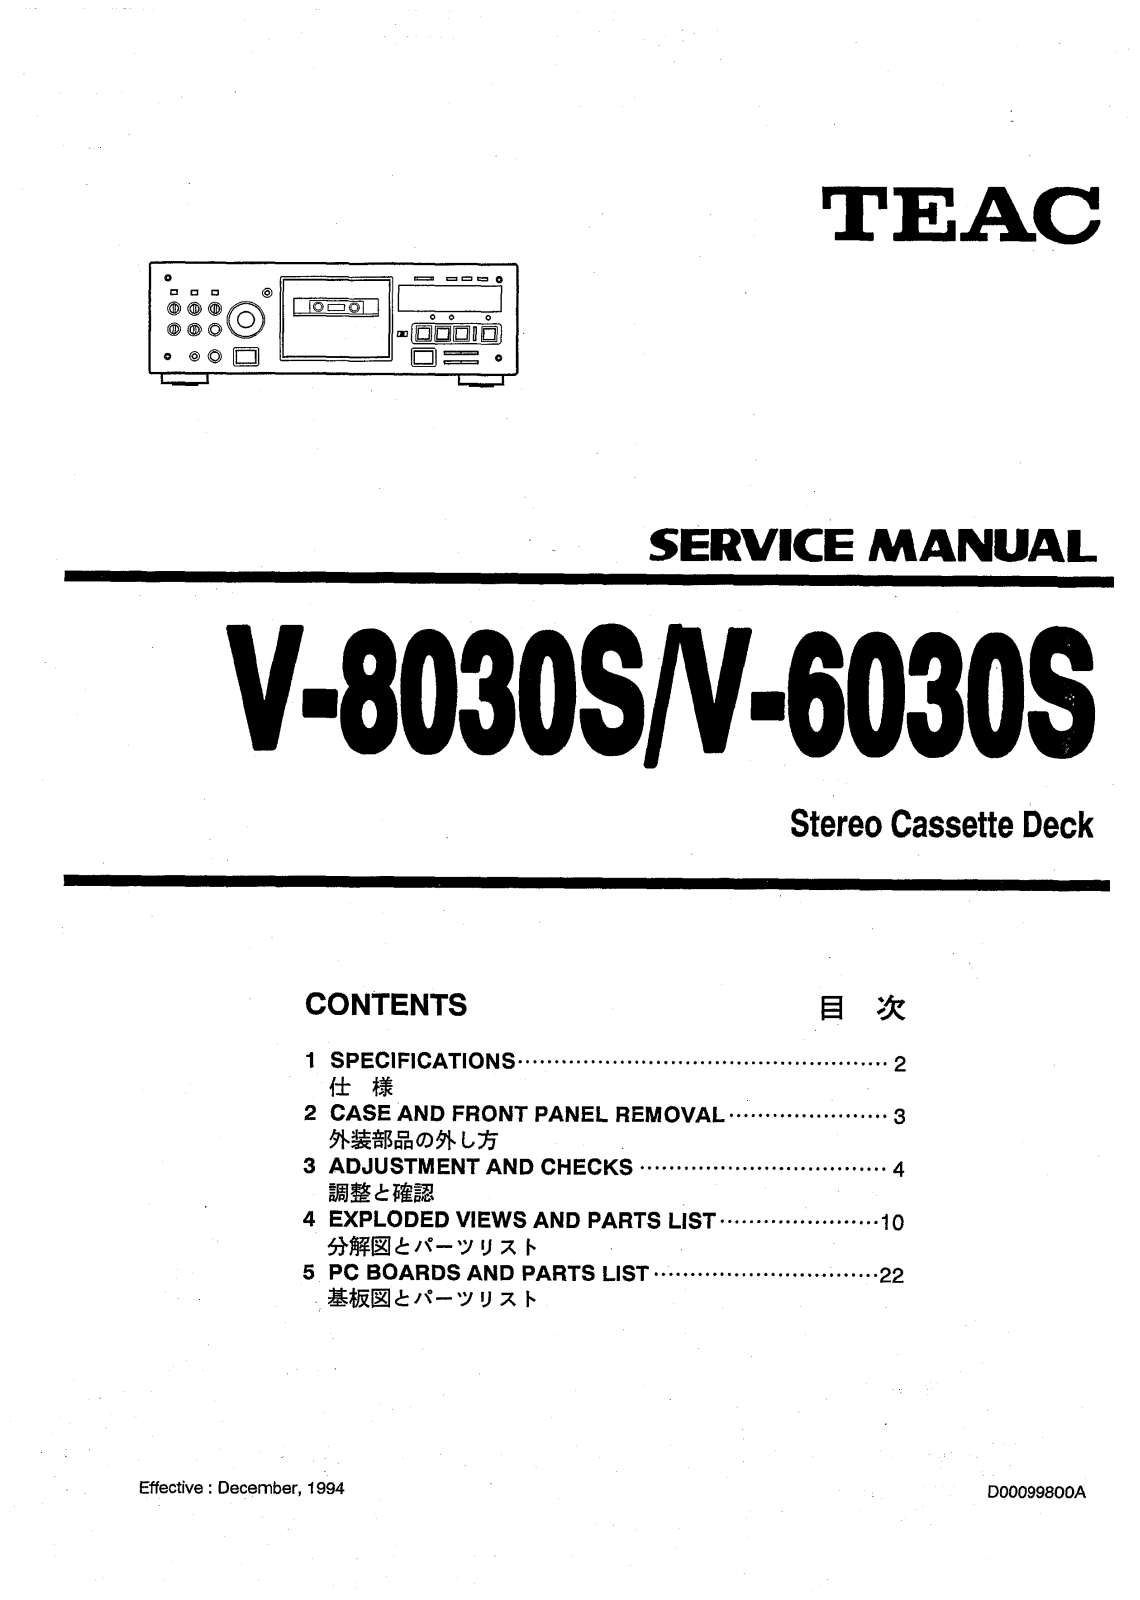 Teac V-6030S Service Manual